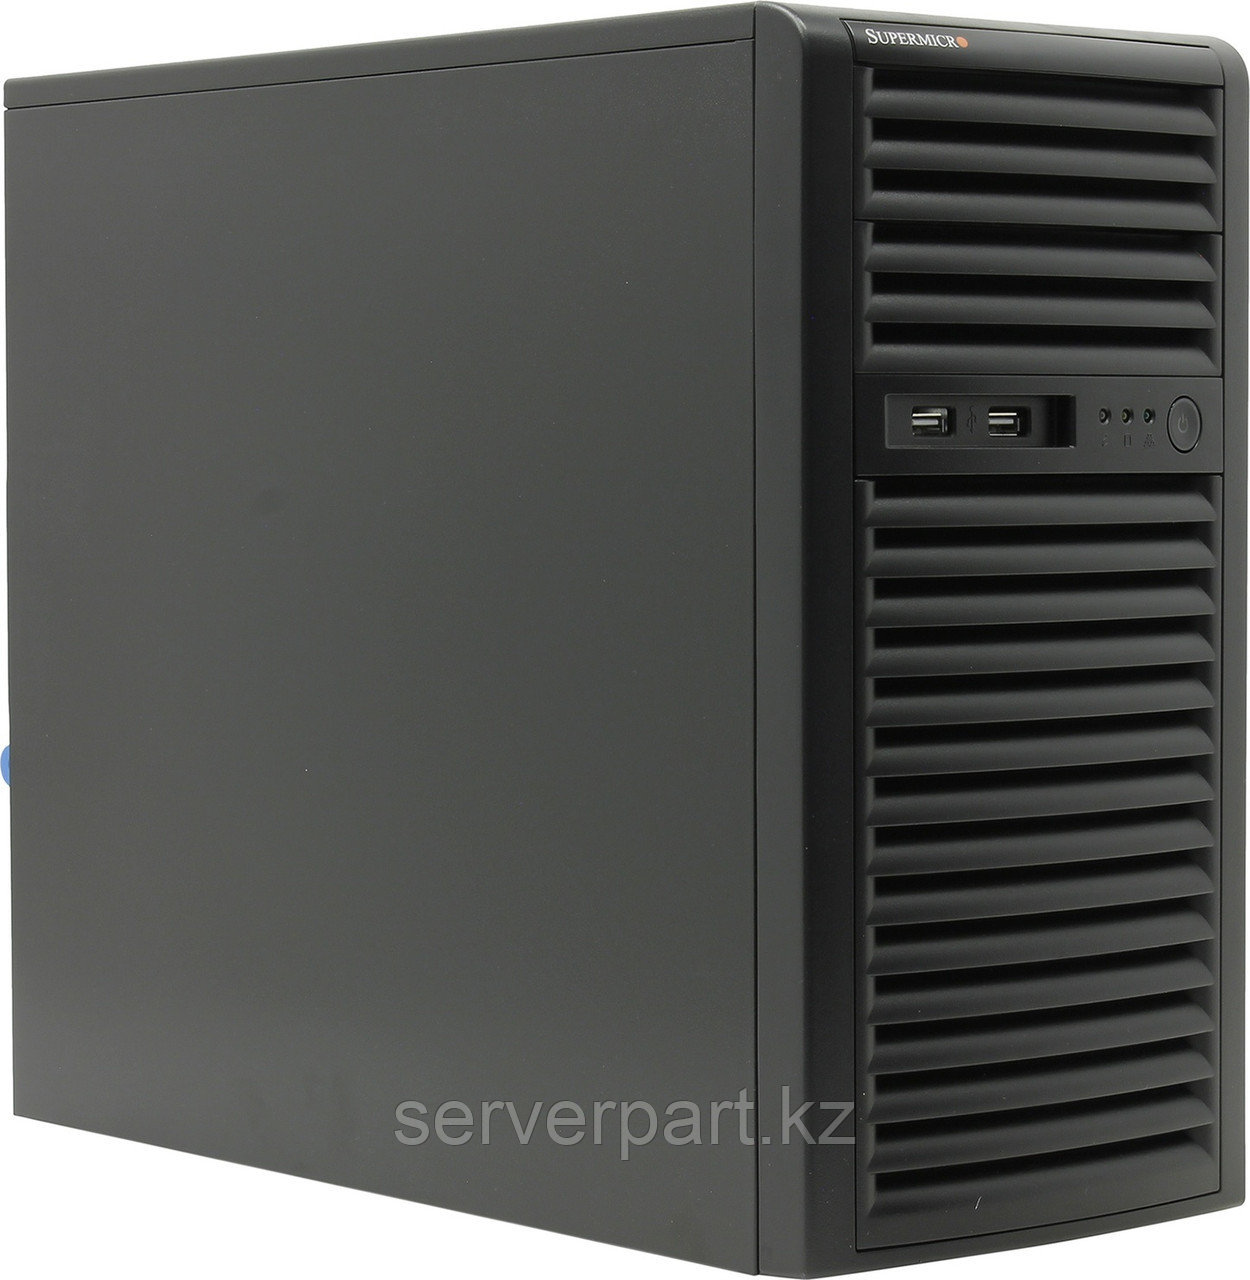 Сервер Supermicro SYS-5039C Tower 4LFF/4-core intel xeon E2124 3.3GHz/16GB EUDIMM/2x480GB SSD RI Hyb, фото 1